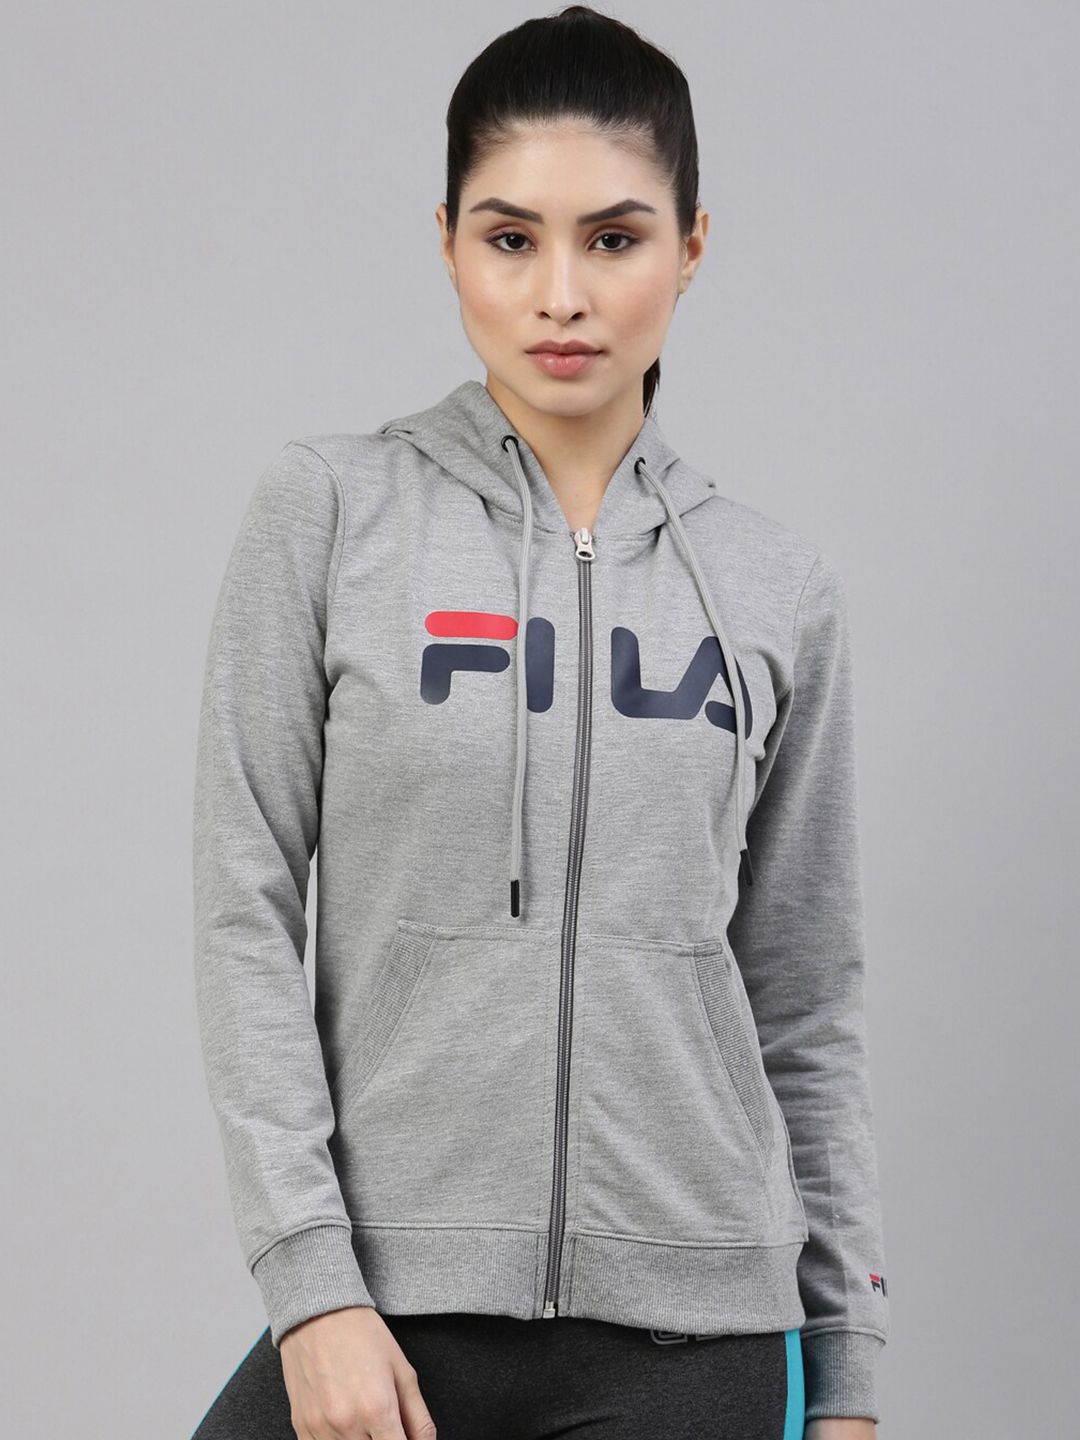 FILA Women Grey Printed Sweatshirt Price in India